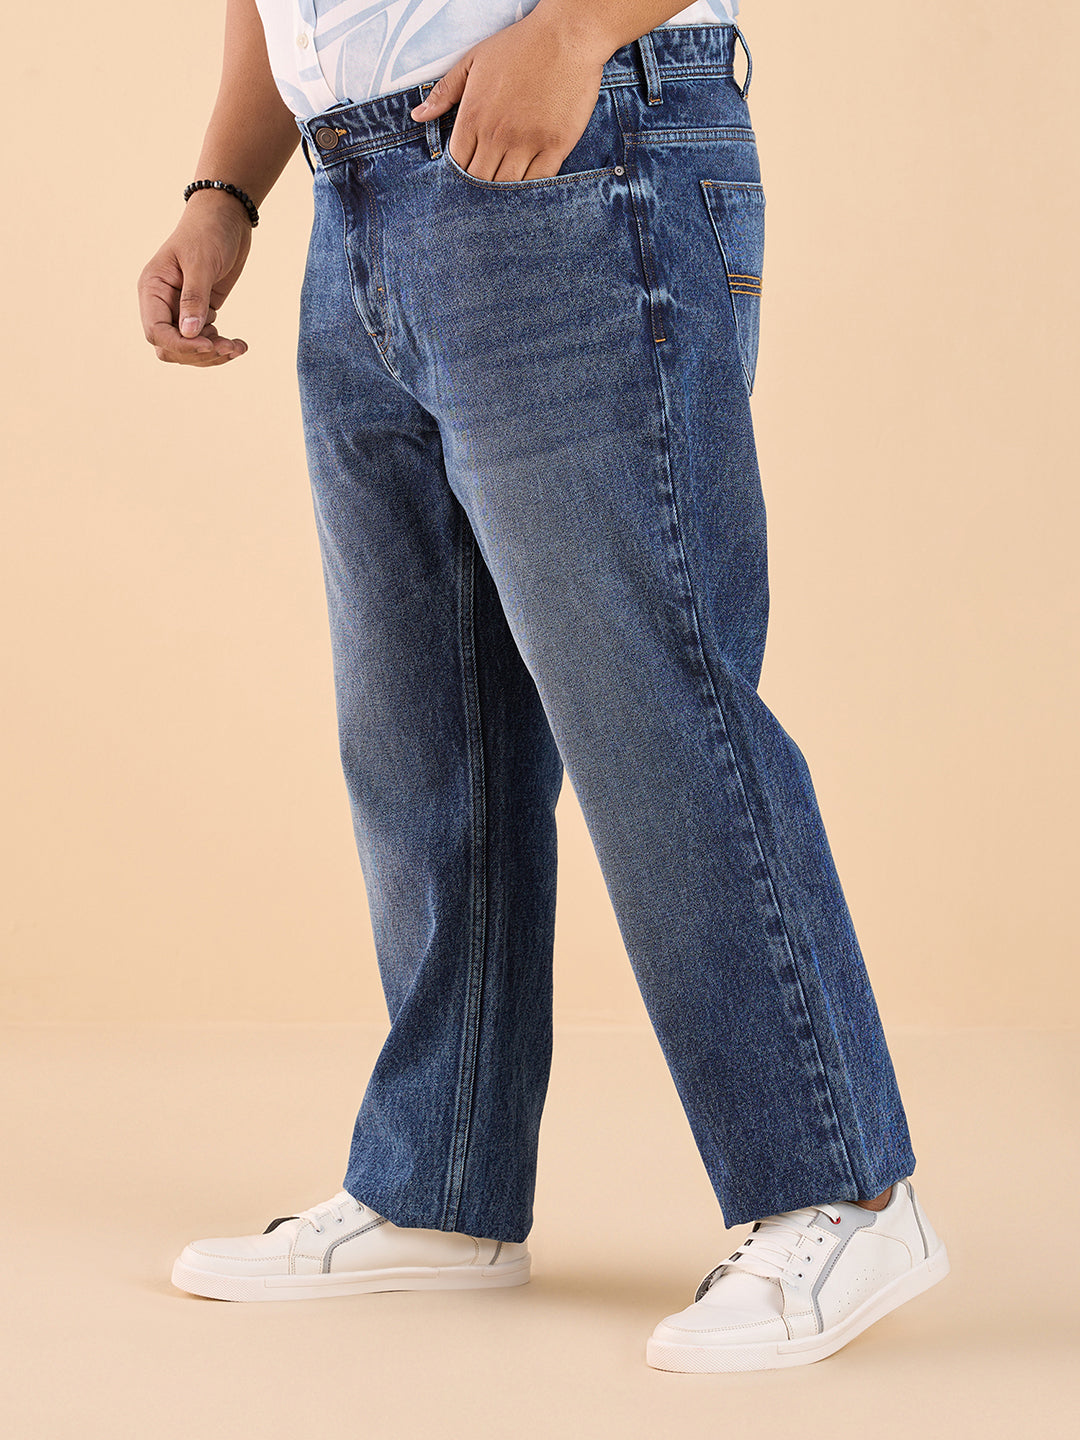 Antique Rugged Indigo Essence James Fit Jeans